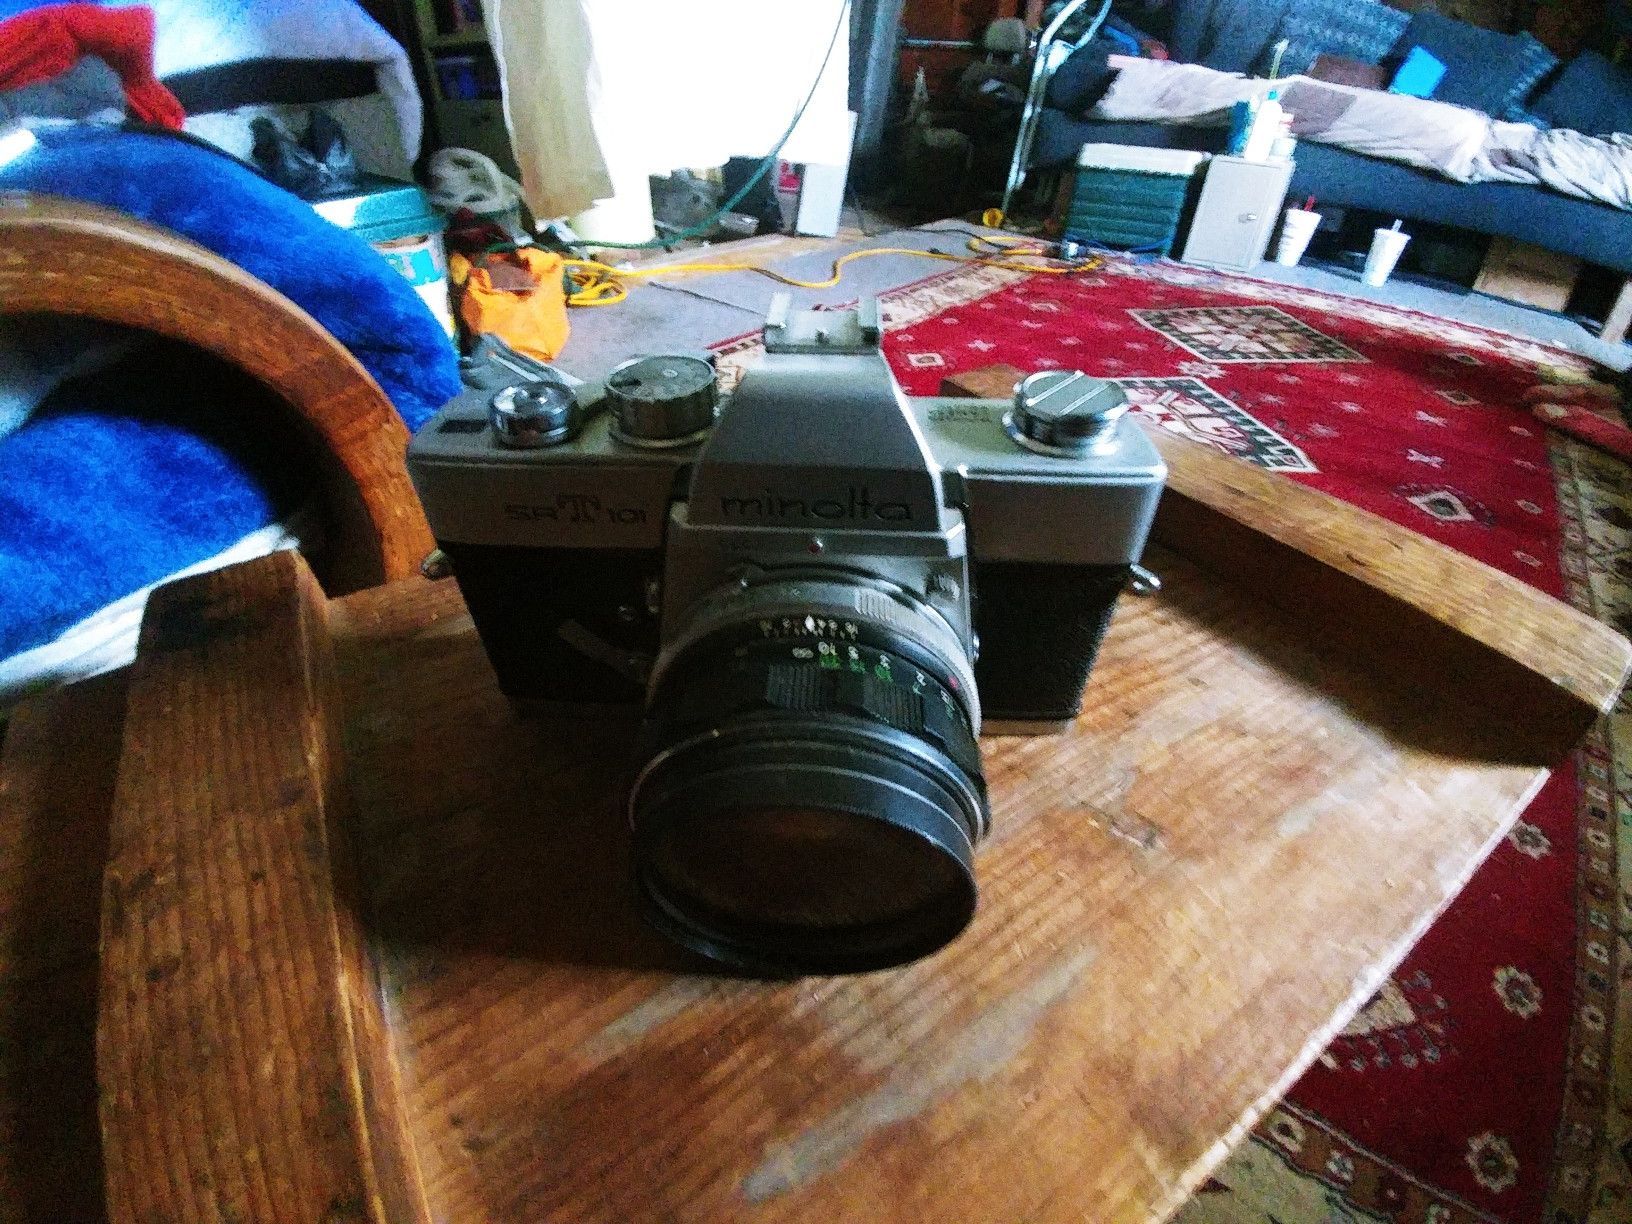 Vintage Minolta camera